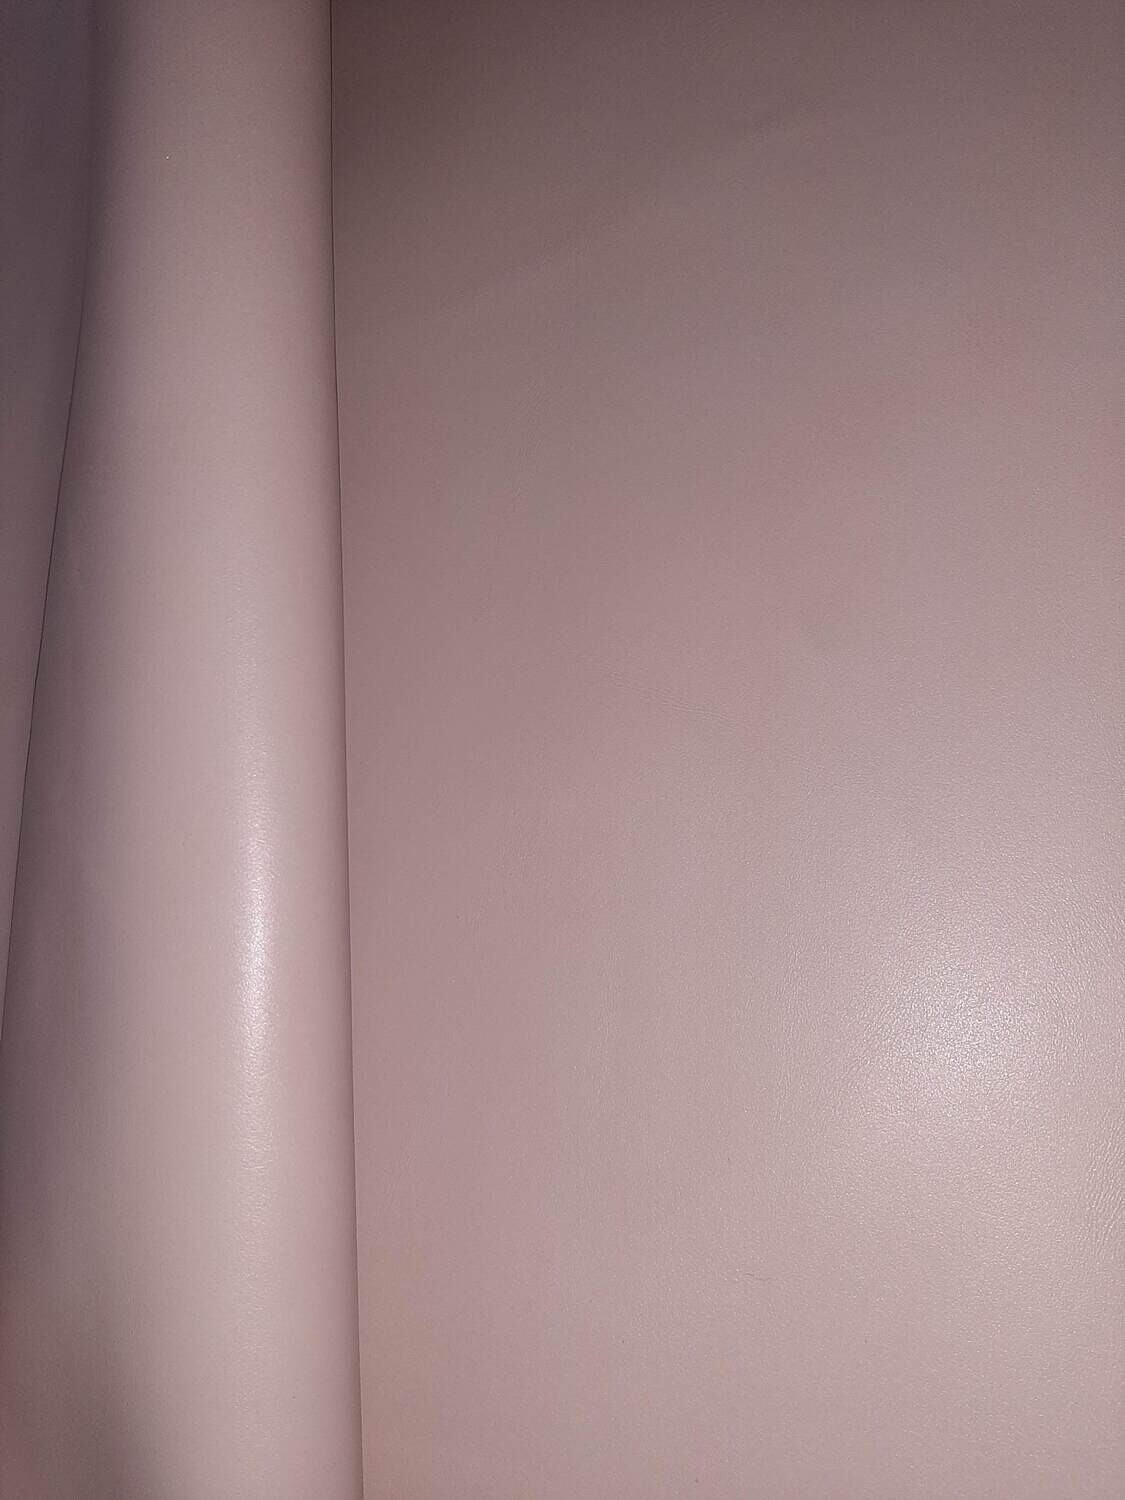 Leather bovine aniline pink color